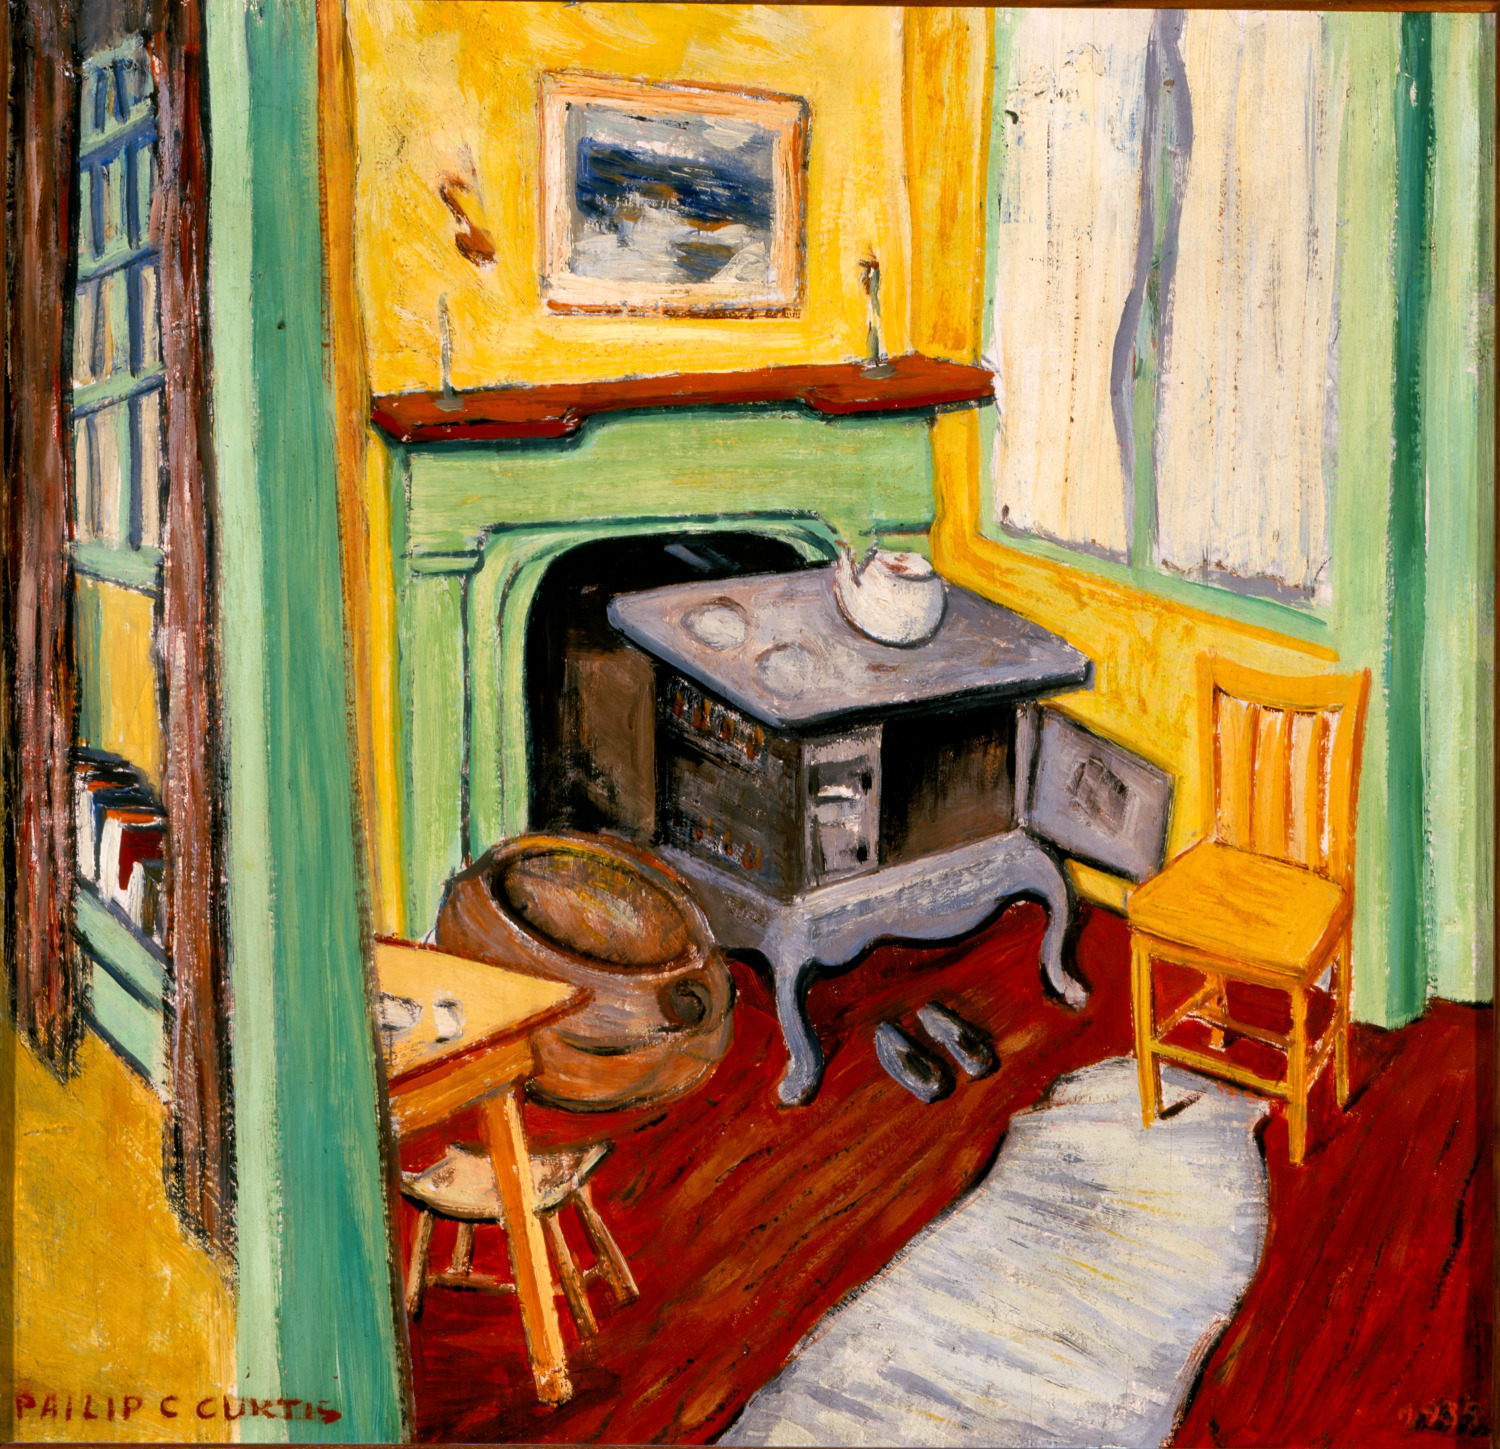 Philip C. Curtis, My Studio (Mi estudio), 1935. Oil on board. Gift of Terese Greene Sterling.